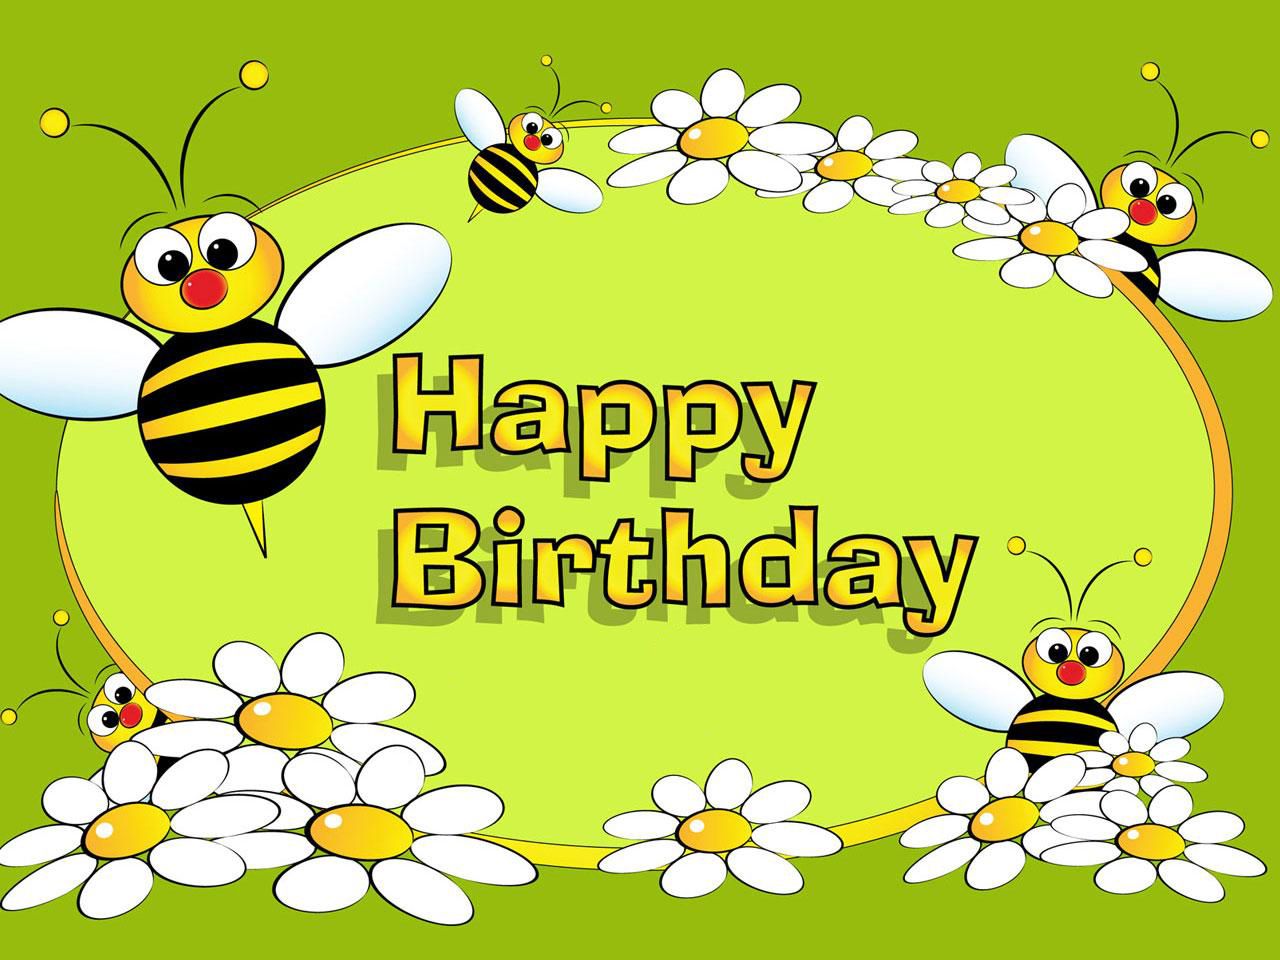 beehive clipart happy birthday